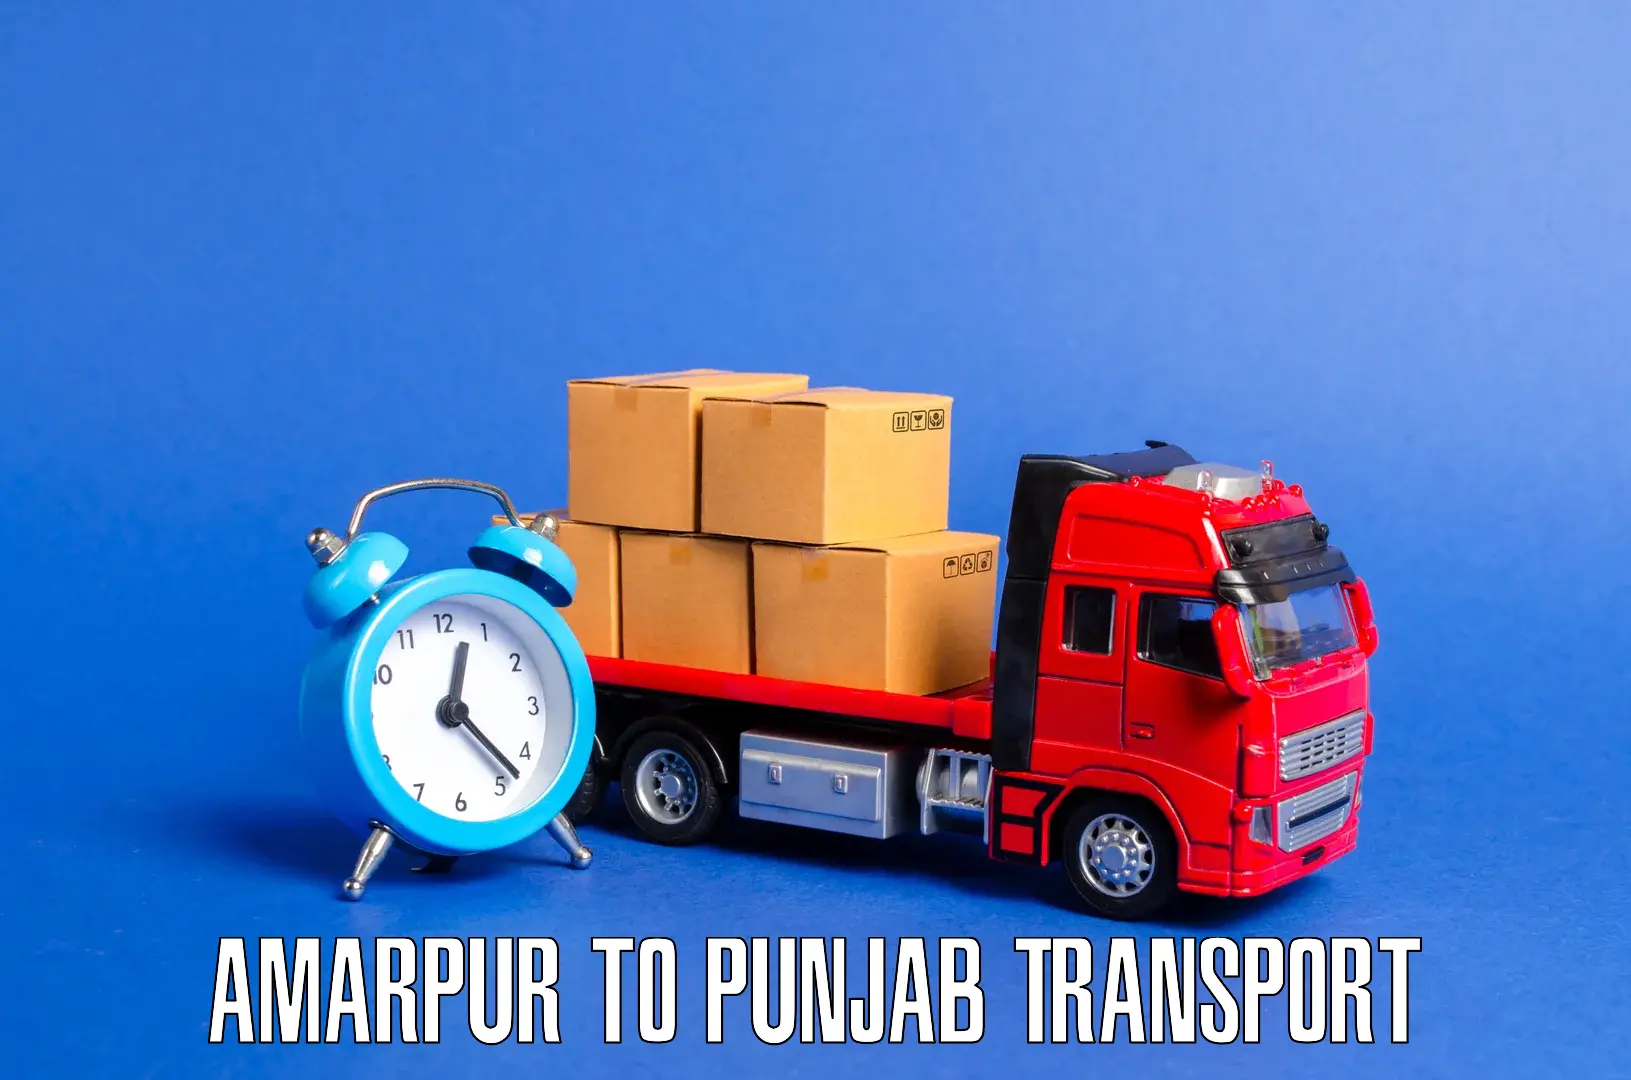 Vehicle transport services Amarpur to Punjab